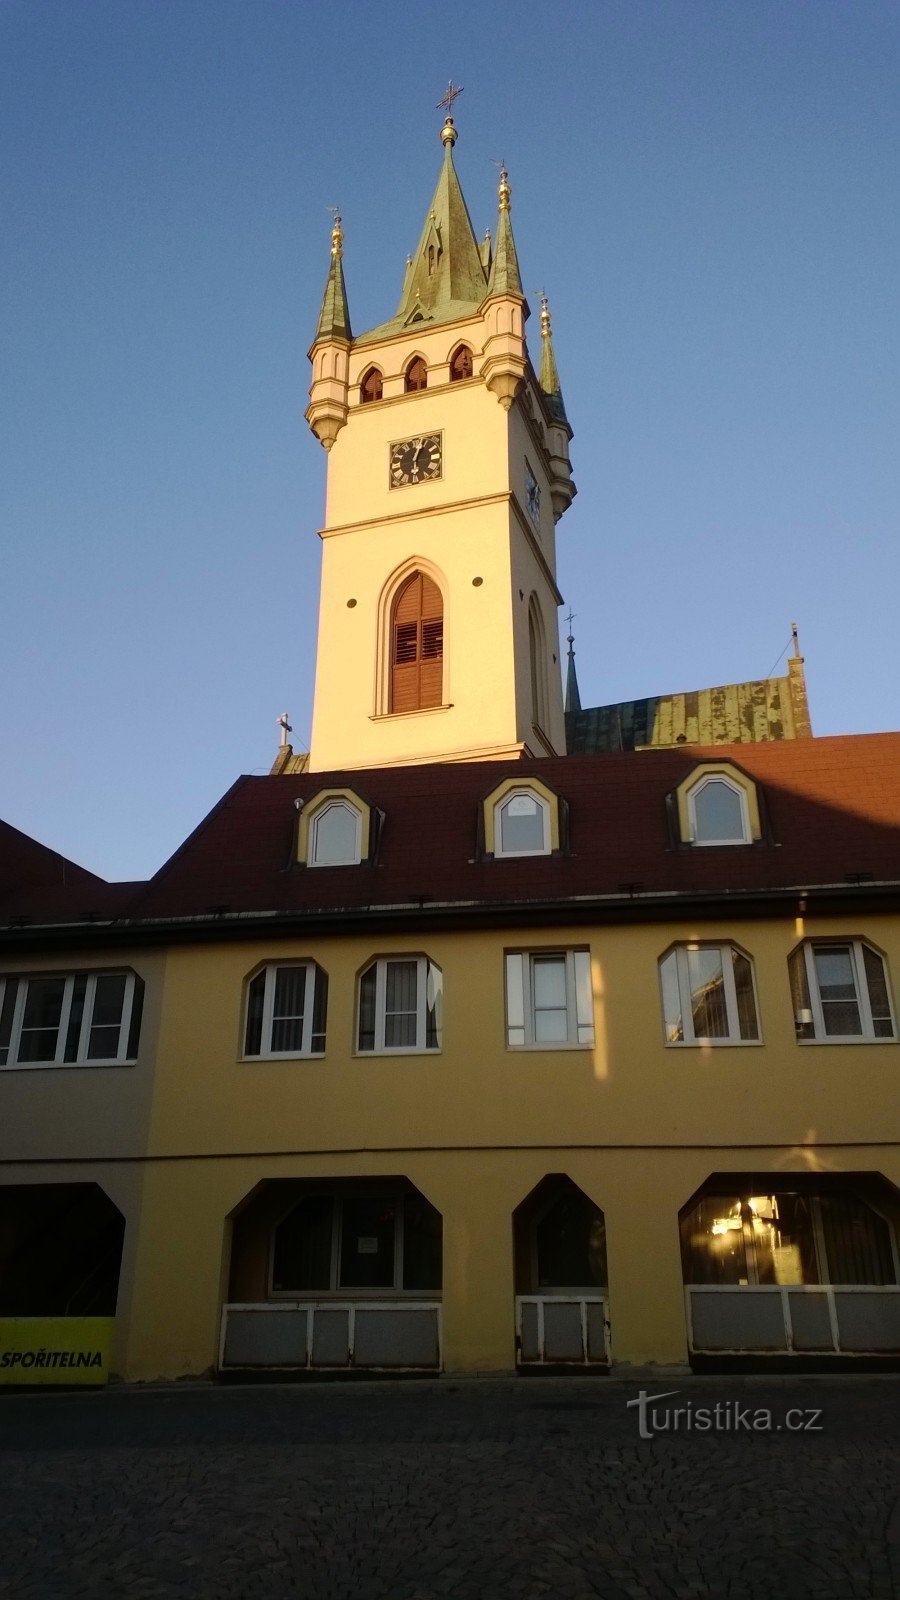 Der Turm der Kirche St. Nikolaus.